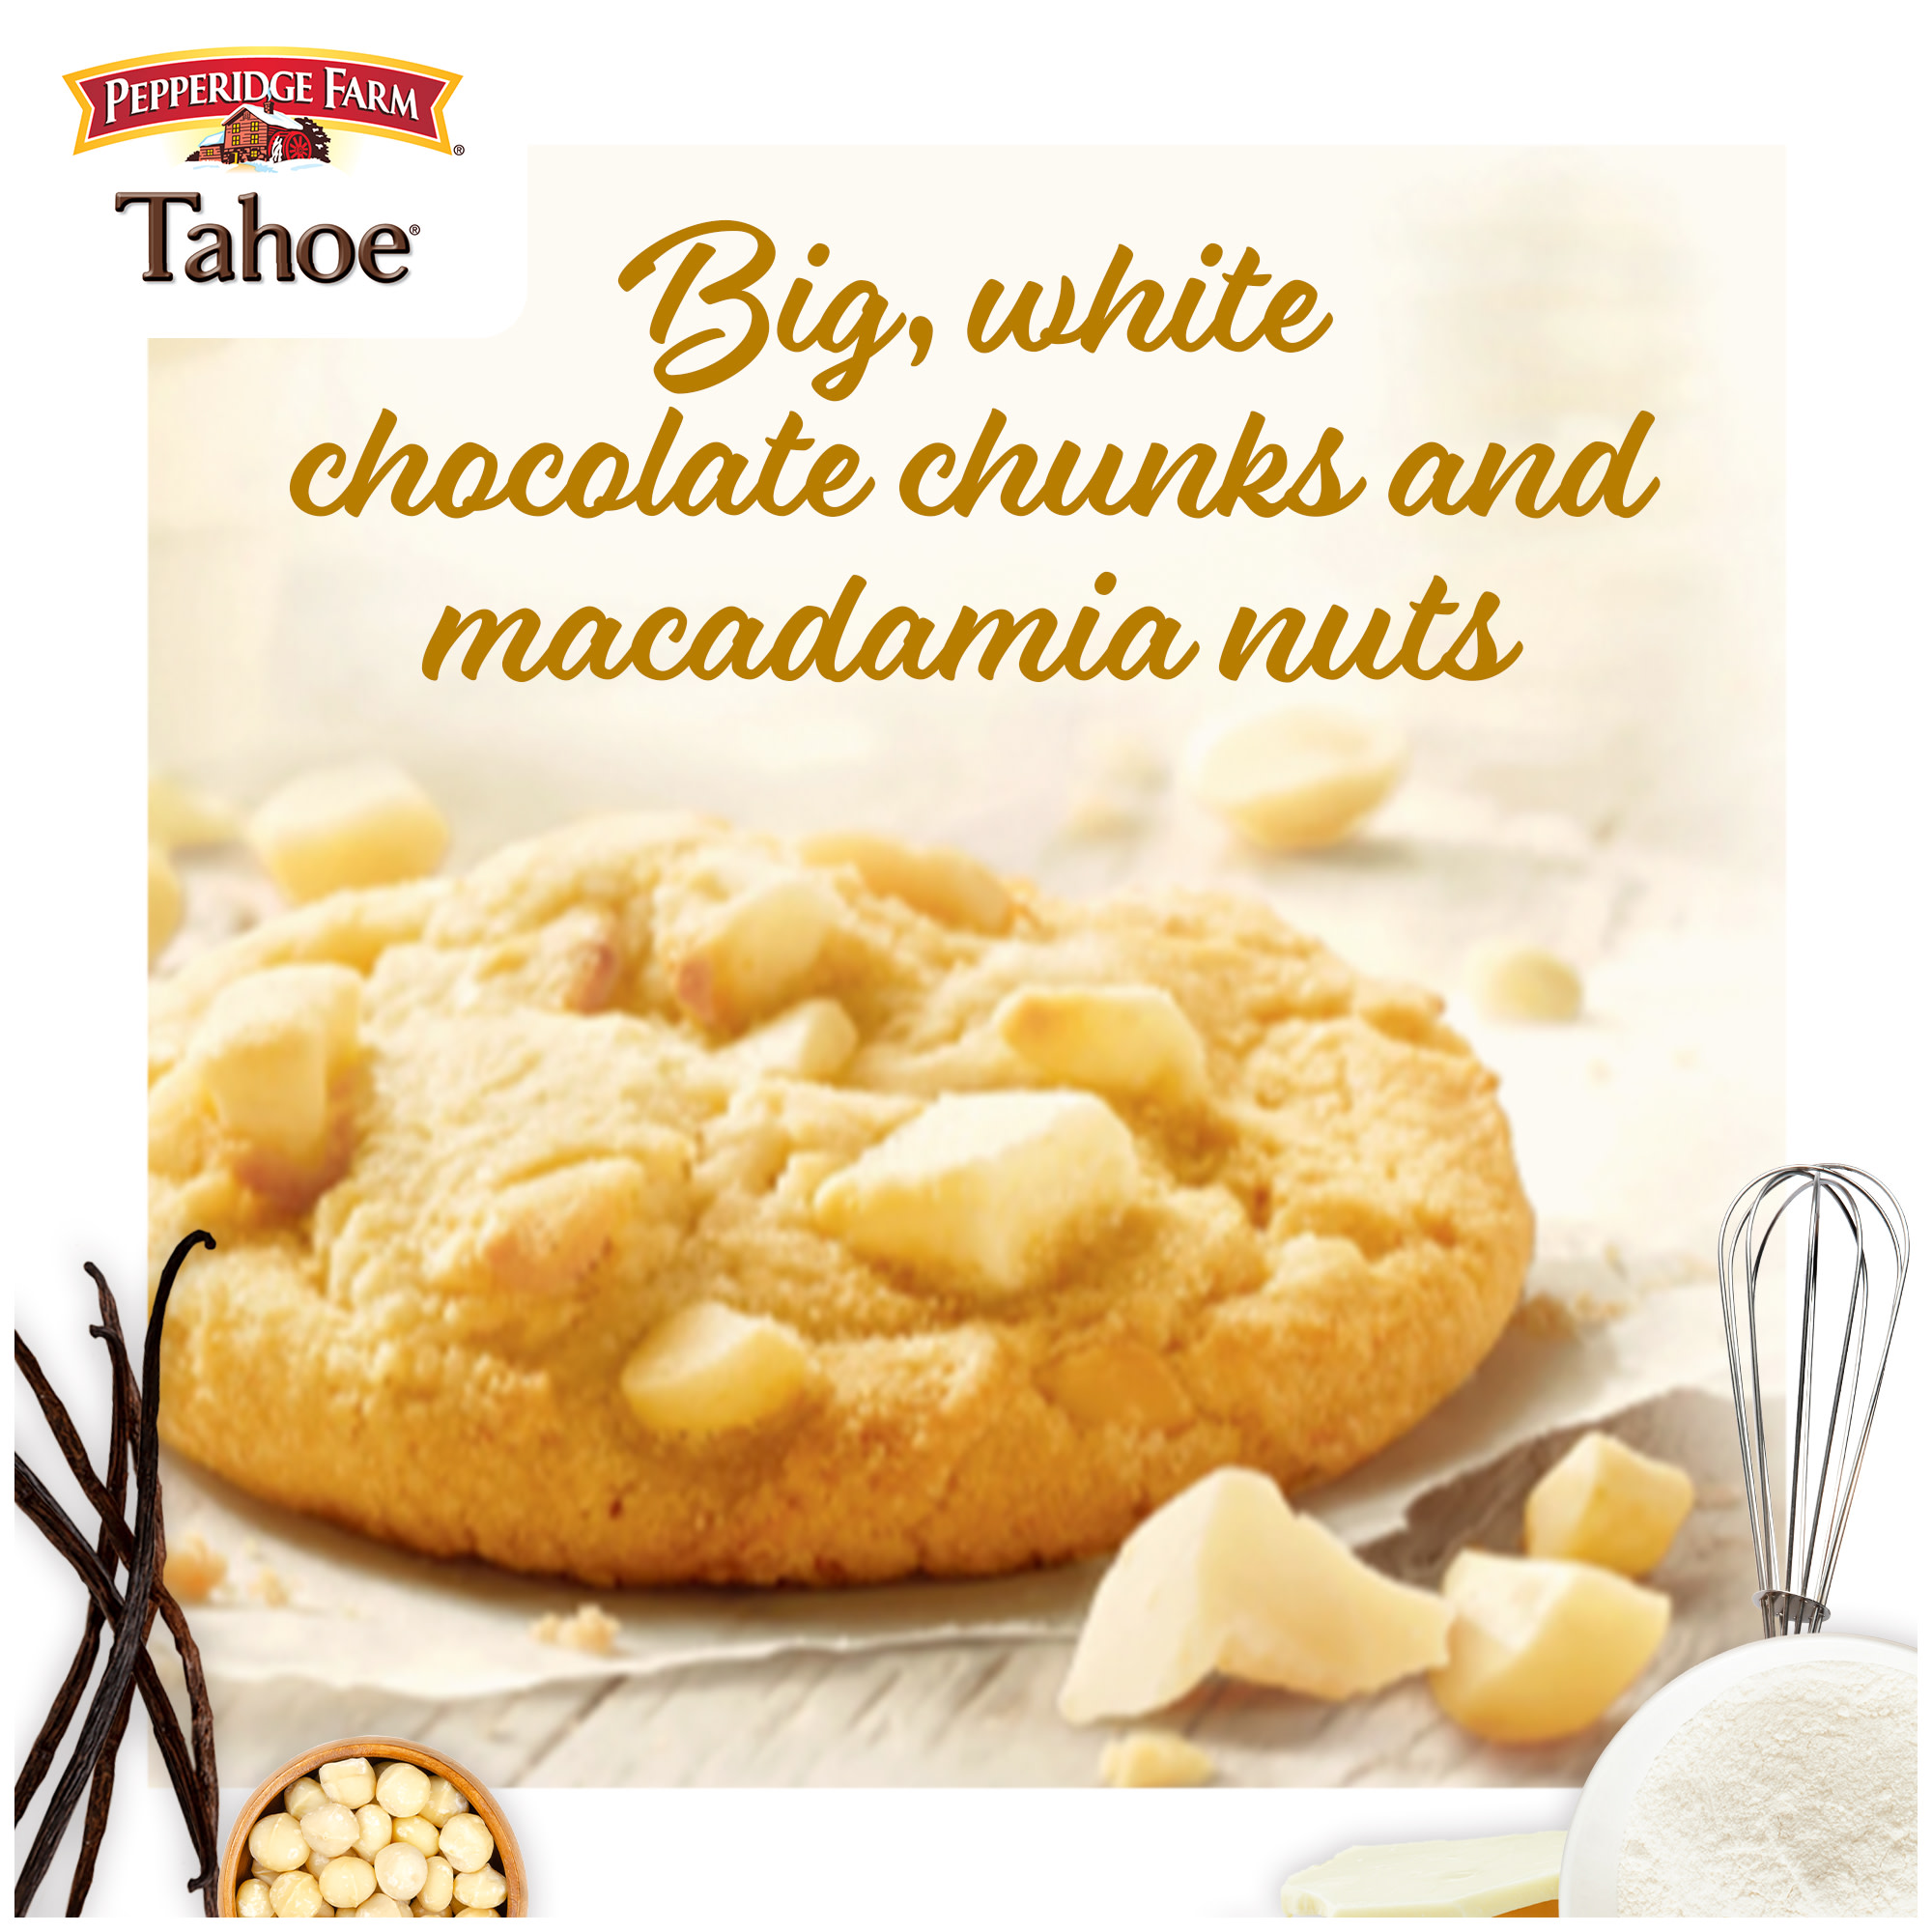 Pepperidge Farm Tahoe Crispy White Chocolate Macadamia Nut Cookies, 7.2 oz Bag (8 Cookies) - image 2 of 9